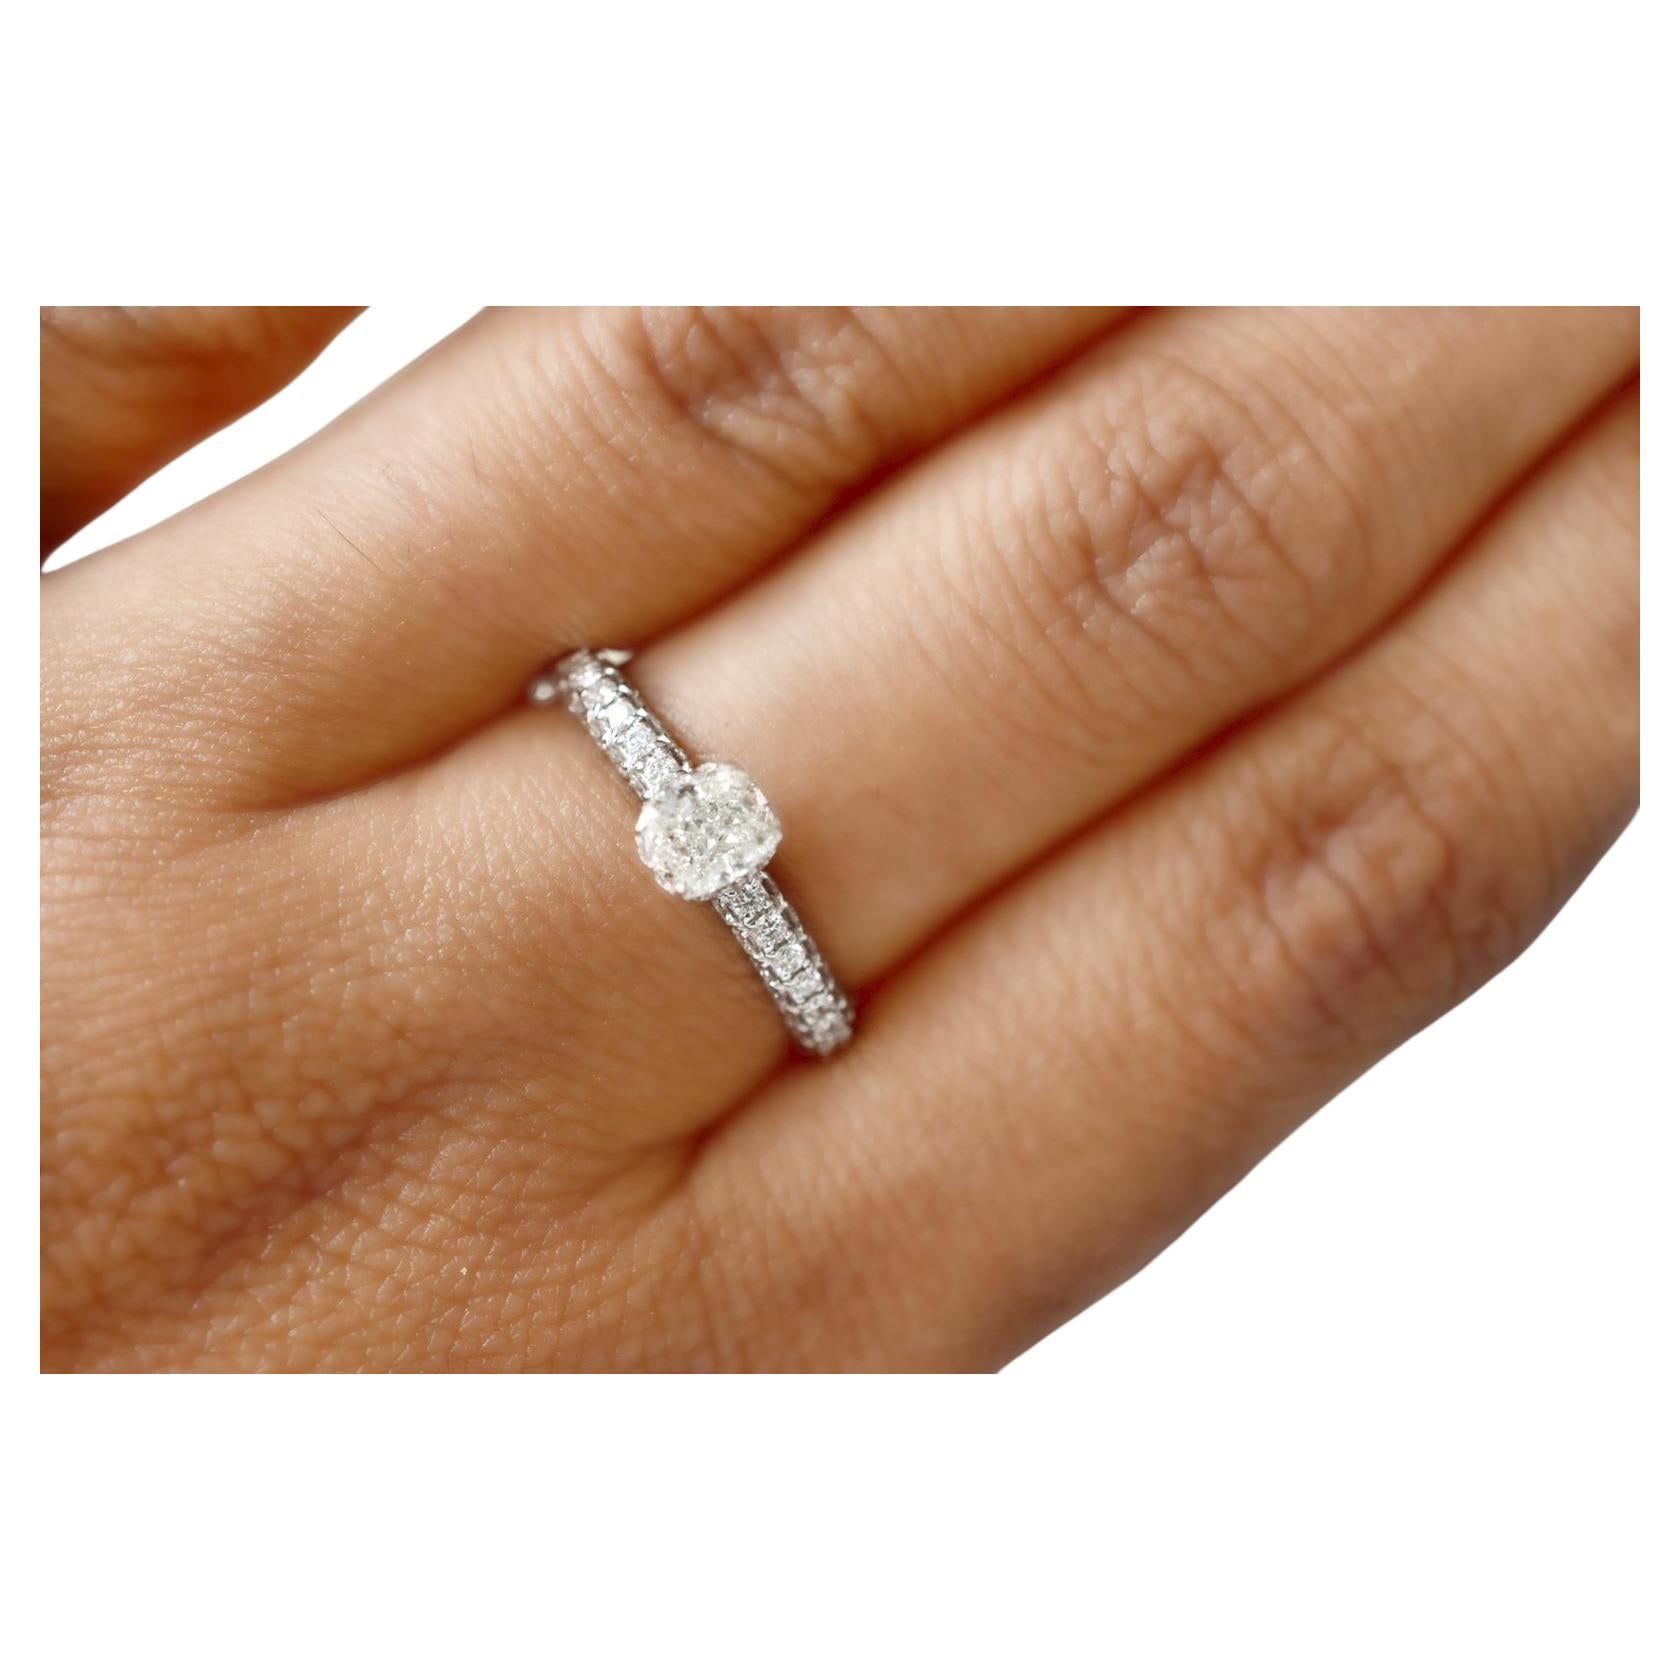 GIA Certified 0.51 Carat White Diamond Ring VVS1 Clarity